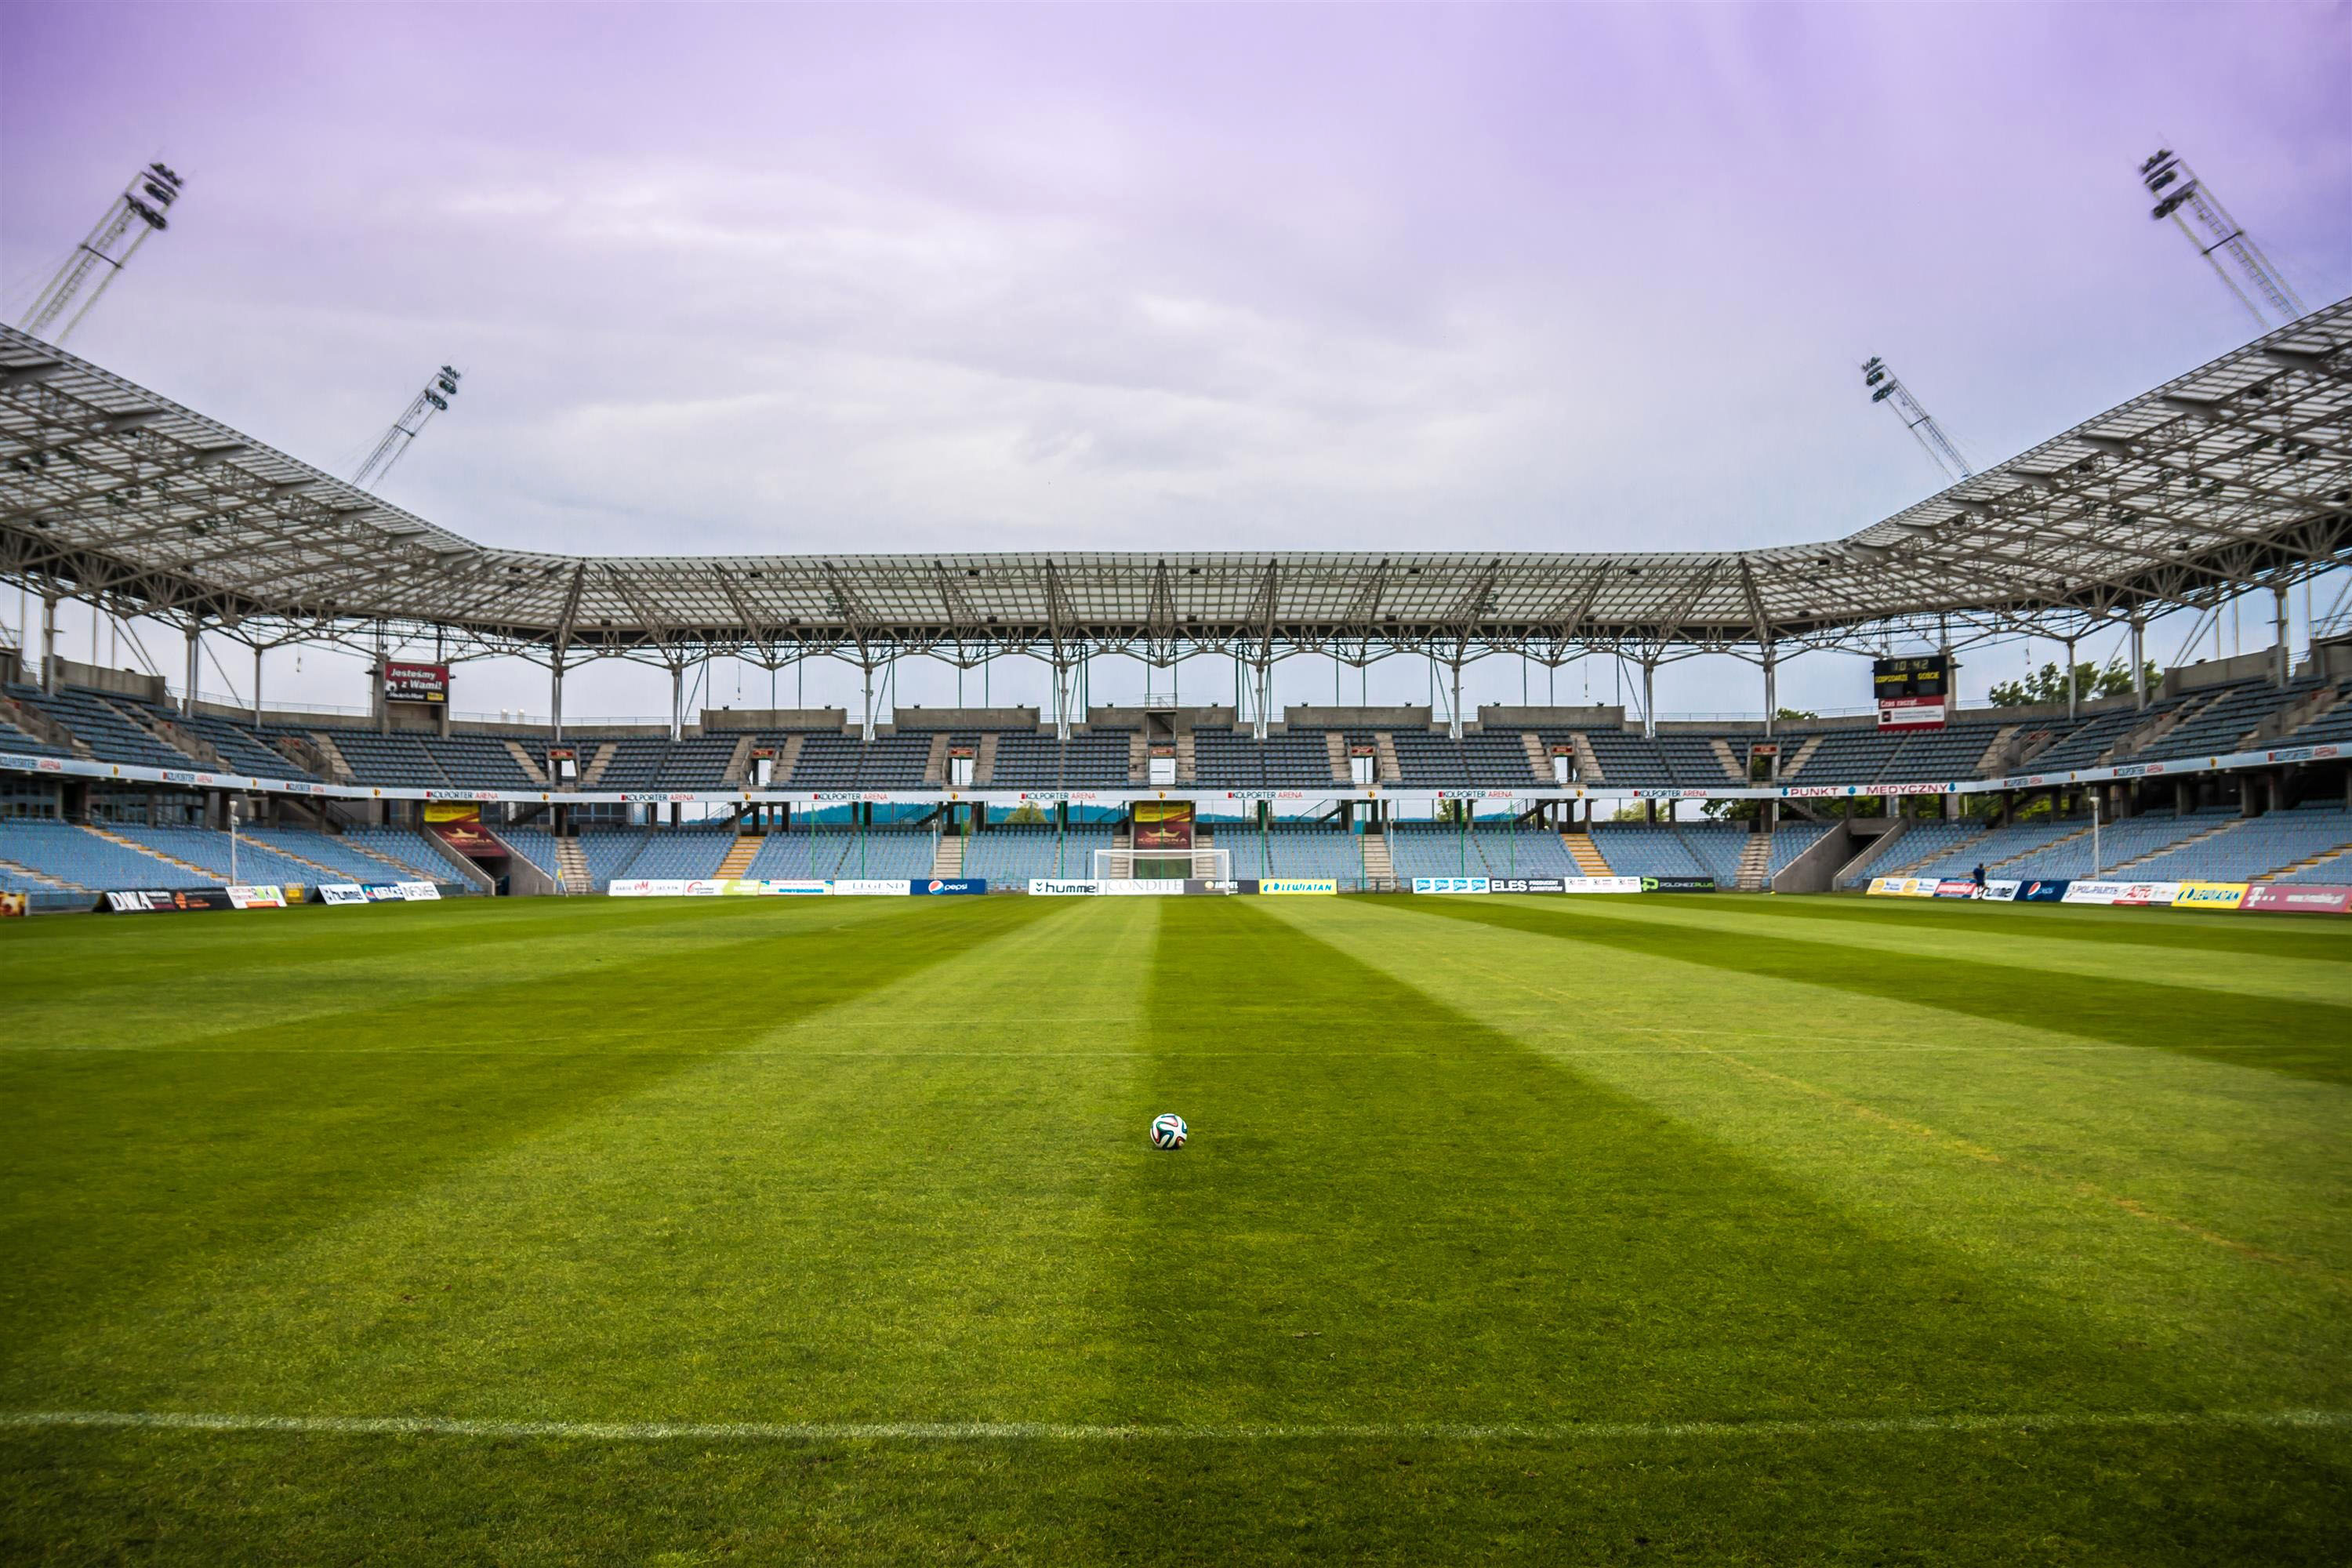 soccer-stadium-arena-image-free-stock-photo-public-domain-photo